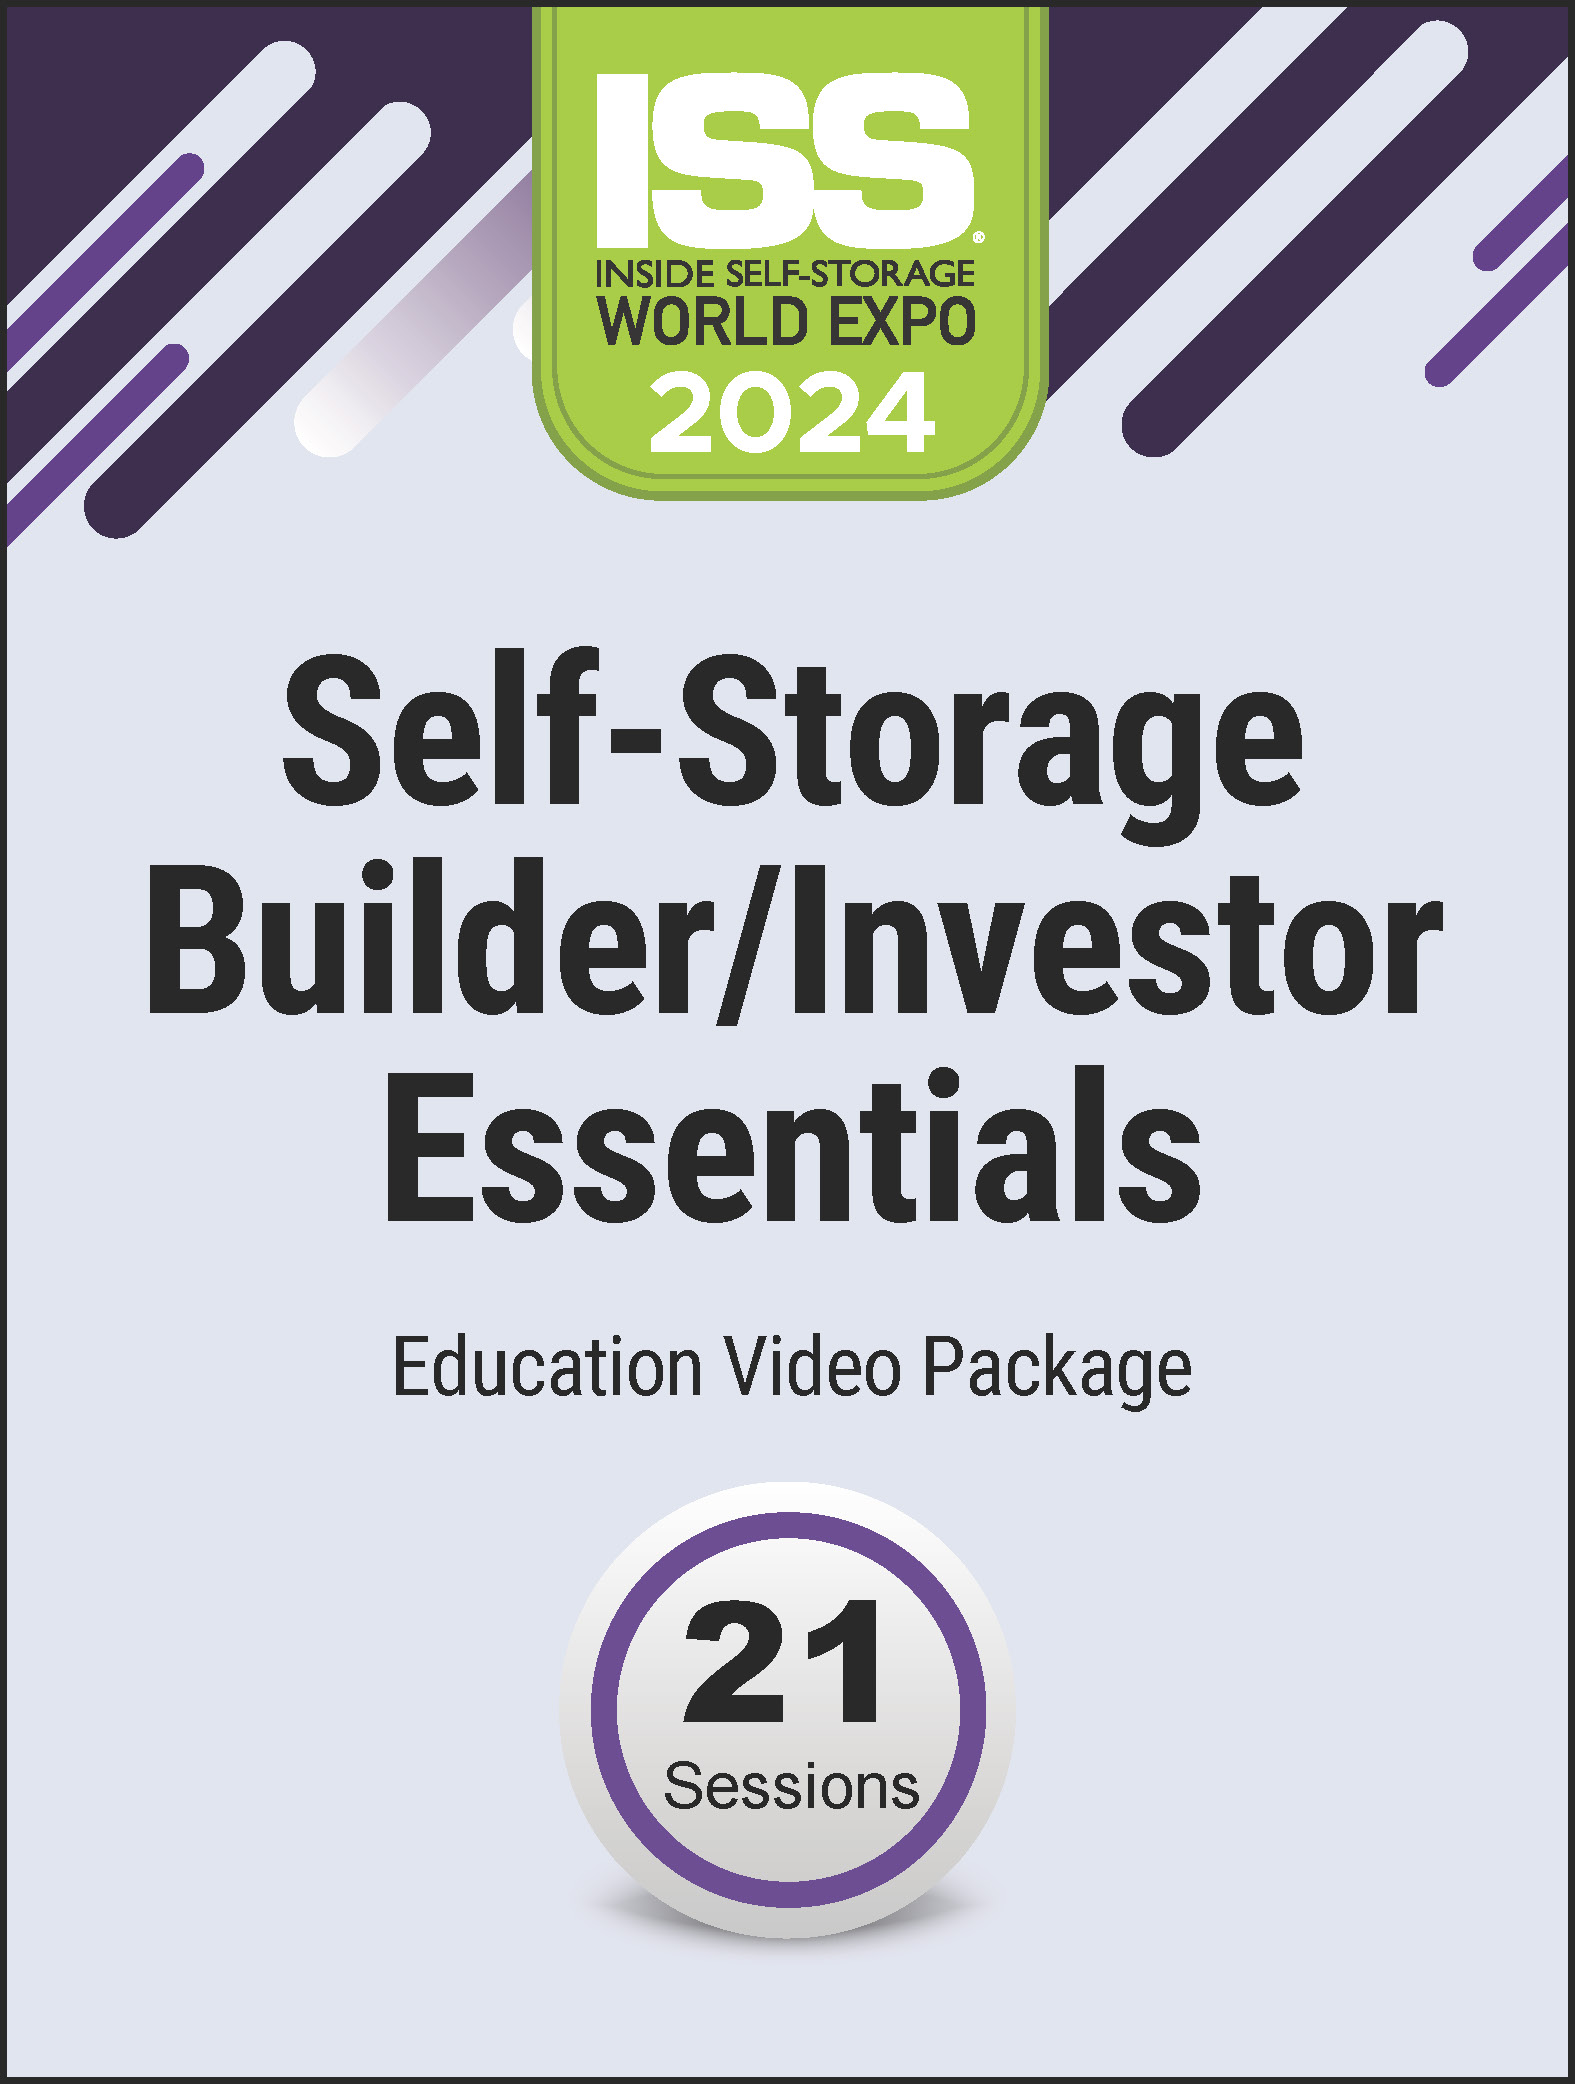 Video Pre-Order PDF - Self-Storage Builder/Investor Essentials 2024 Education Video Package